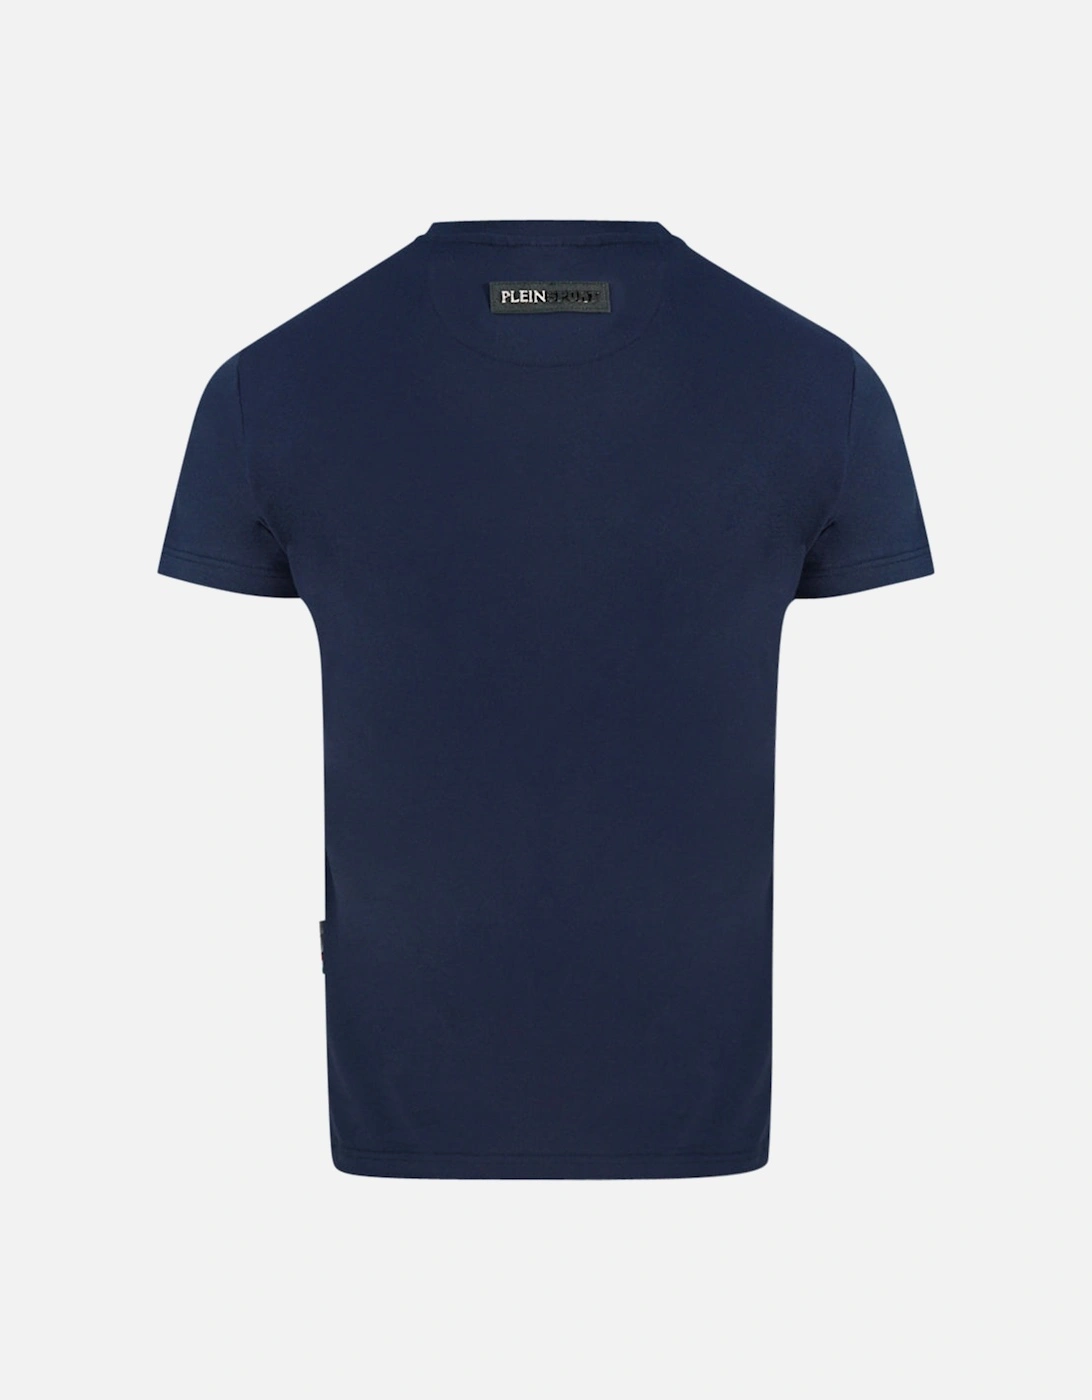 Plein Sport Block Pink Logo Navy Blue T-Shirt